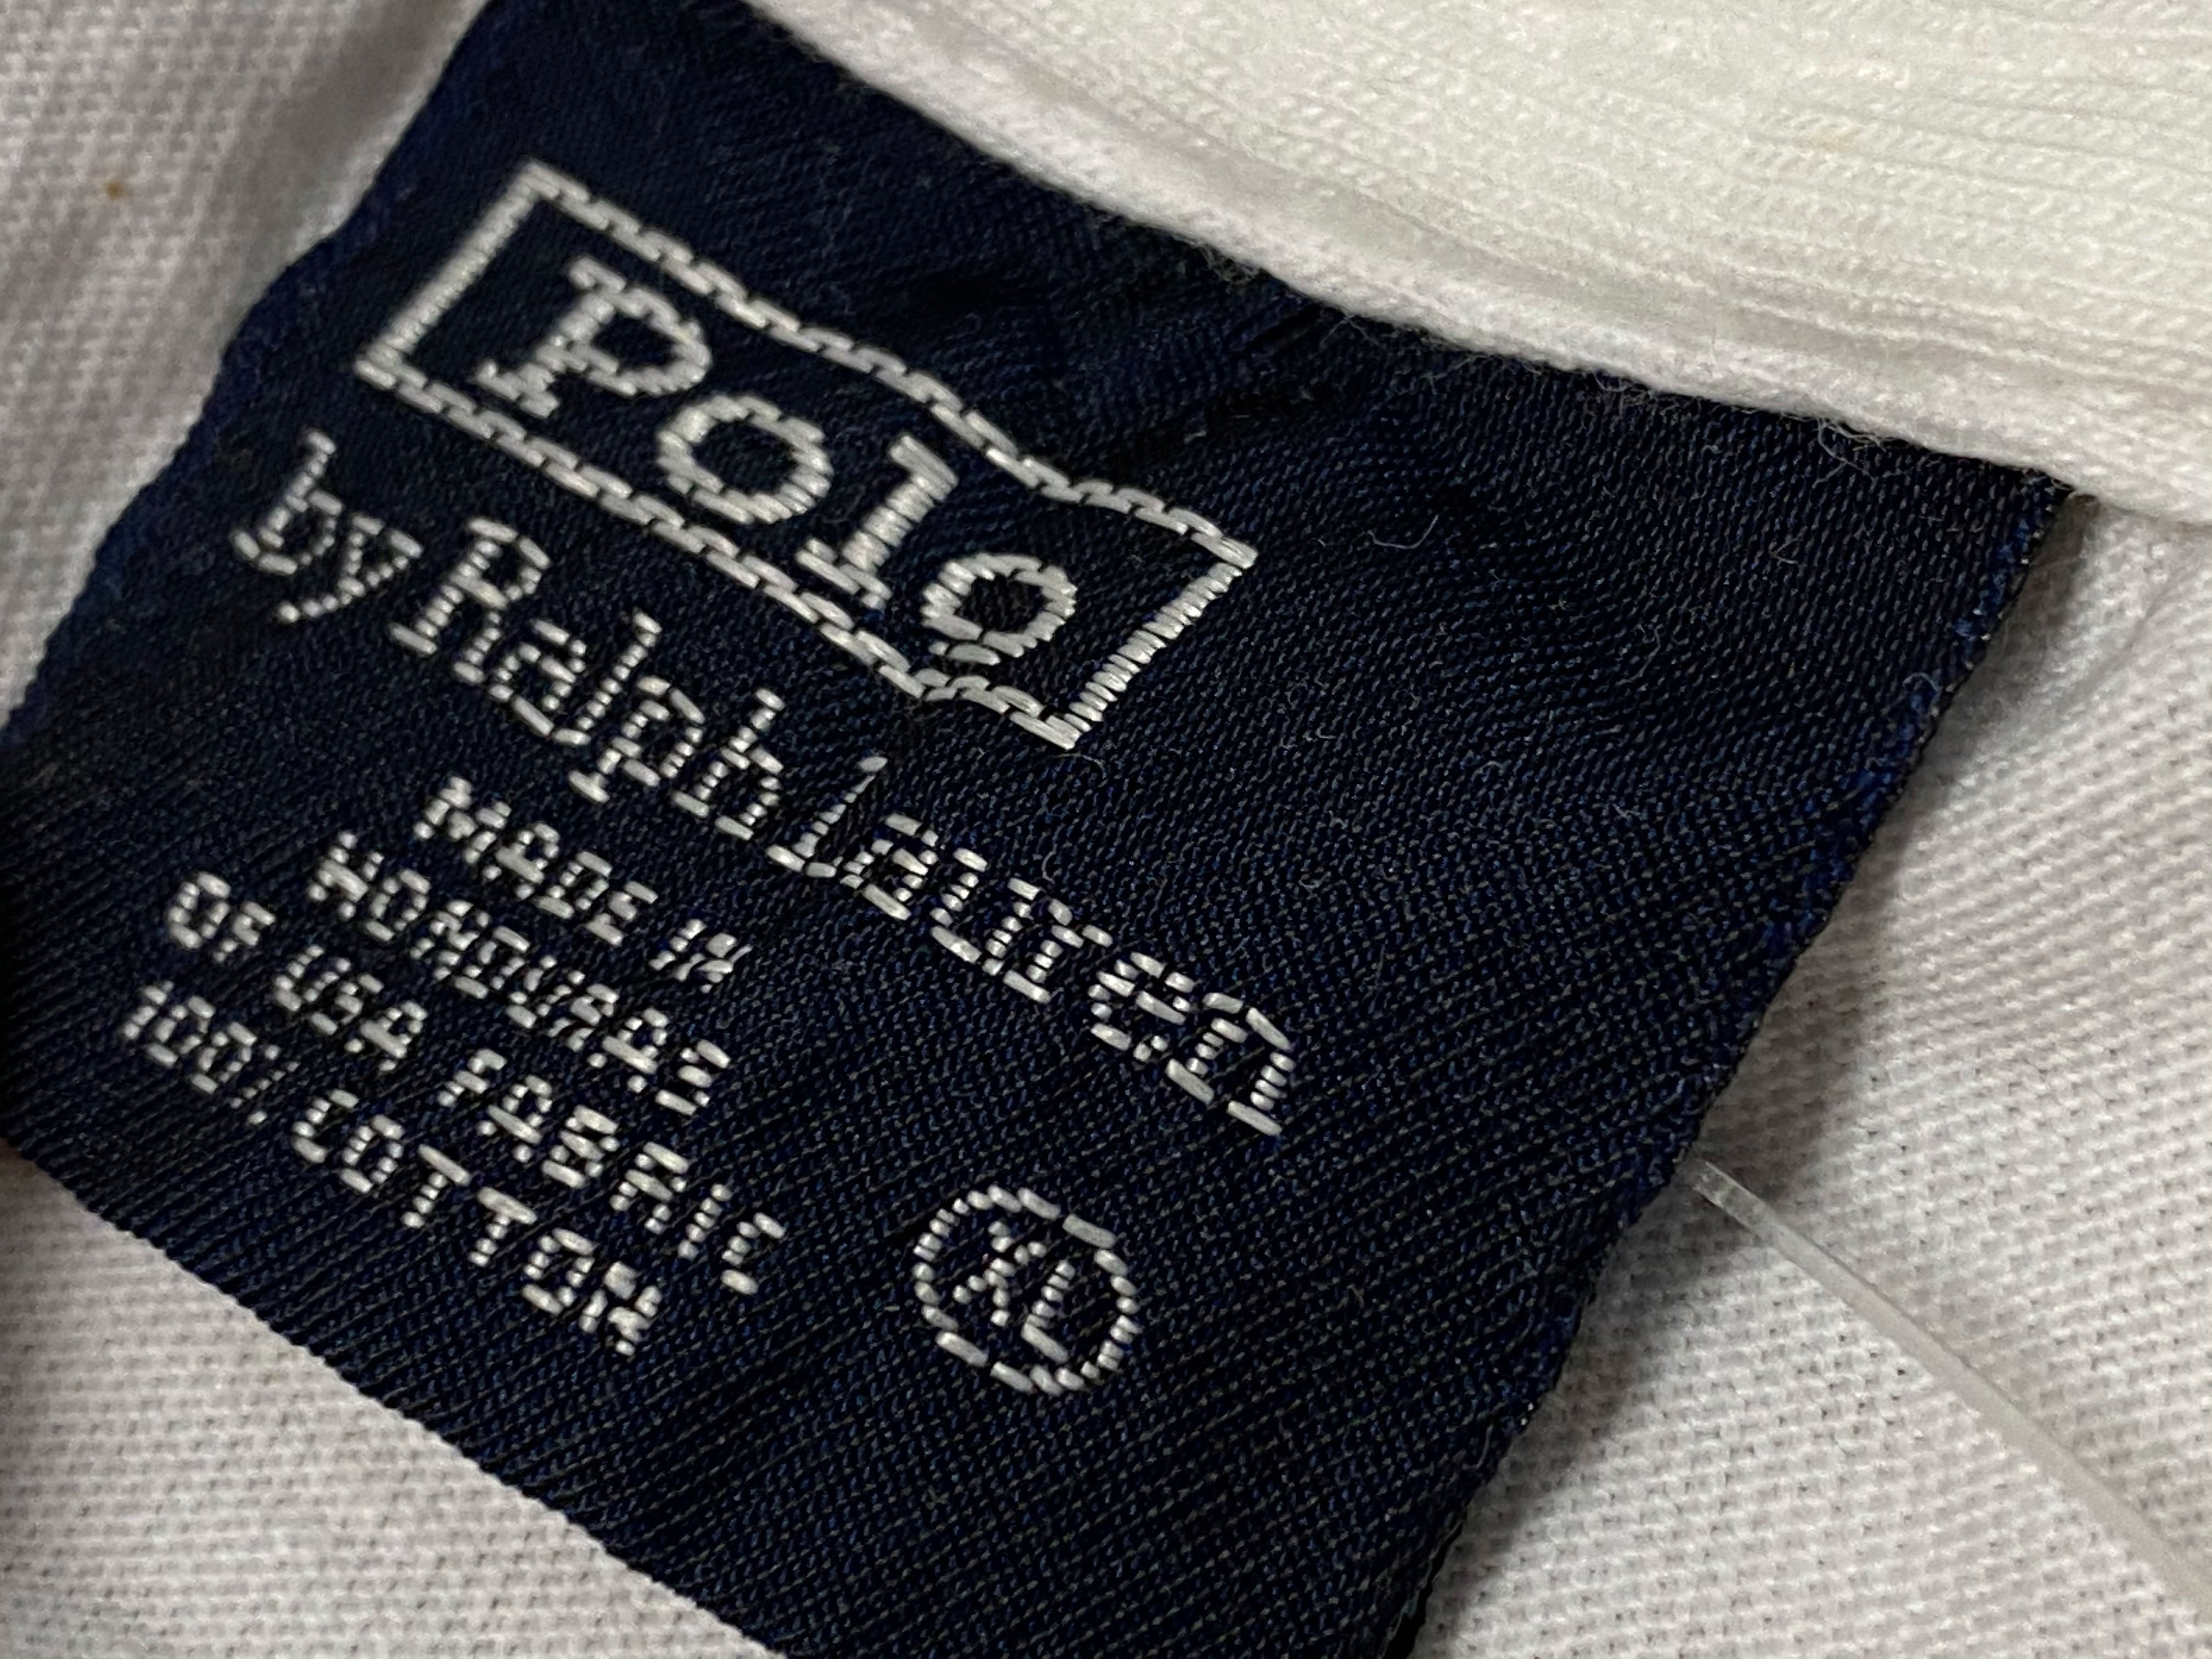 Polo By Ralph Lauren Basic Pocket Tee - White/Green Logo